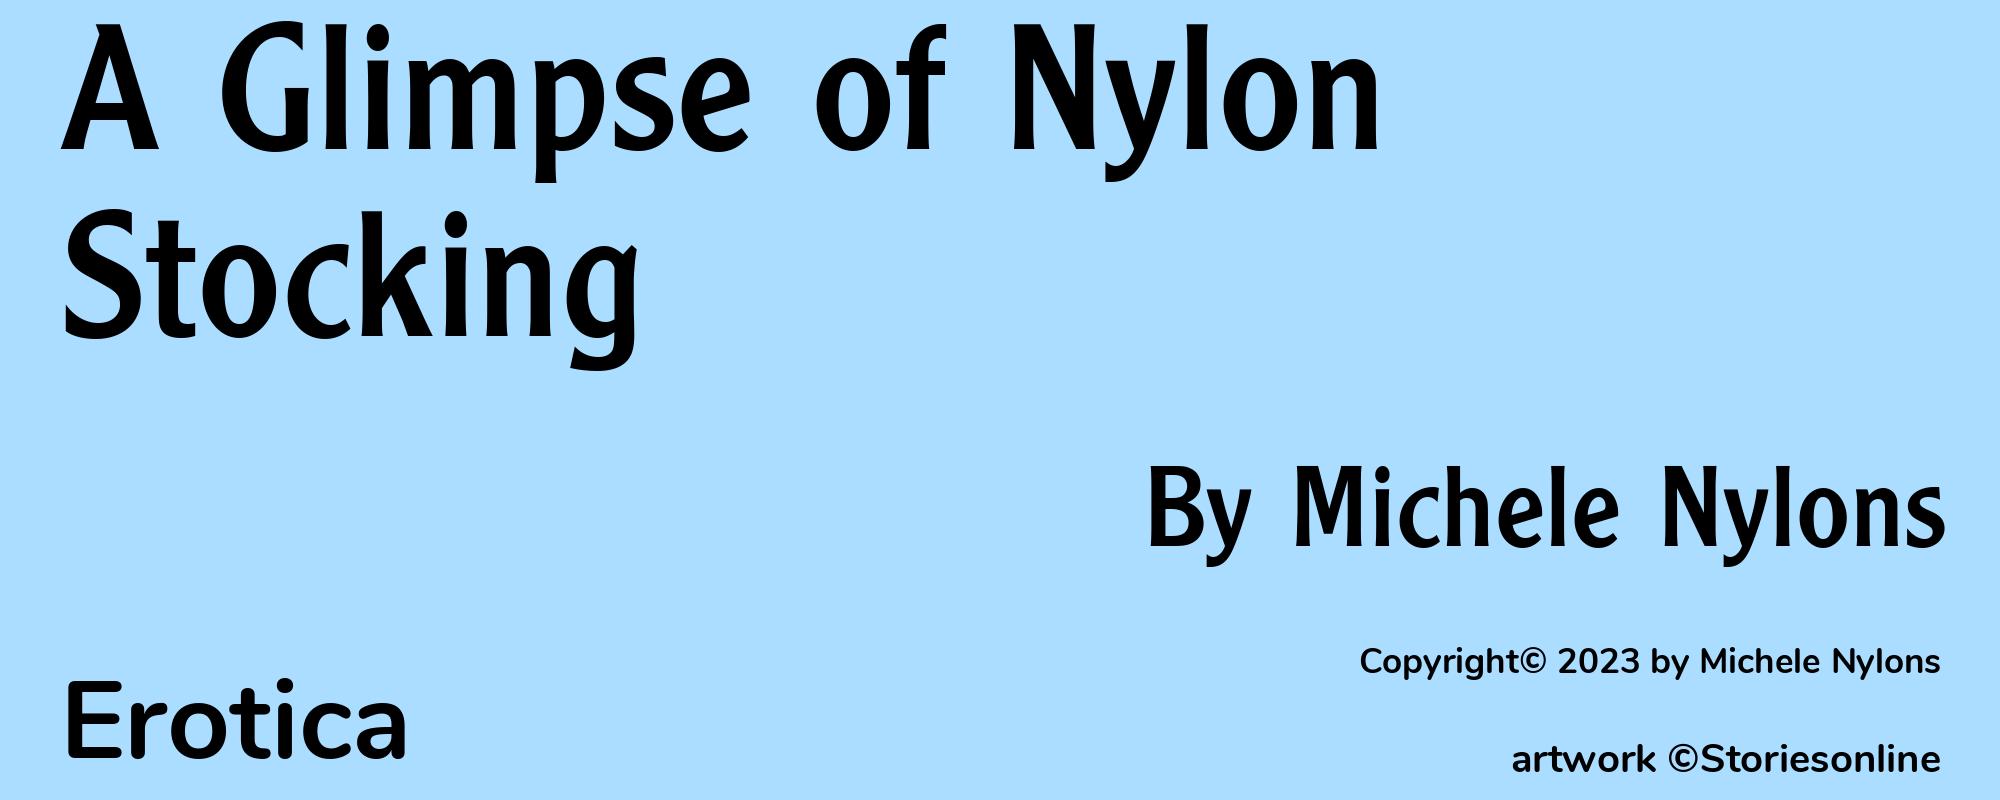 A Glimpse of Nylon Stocking - Cover